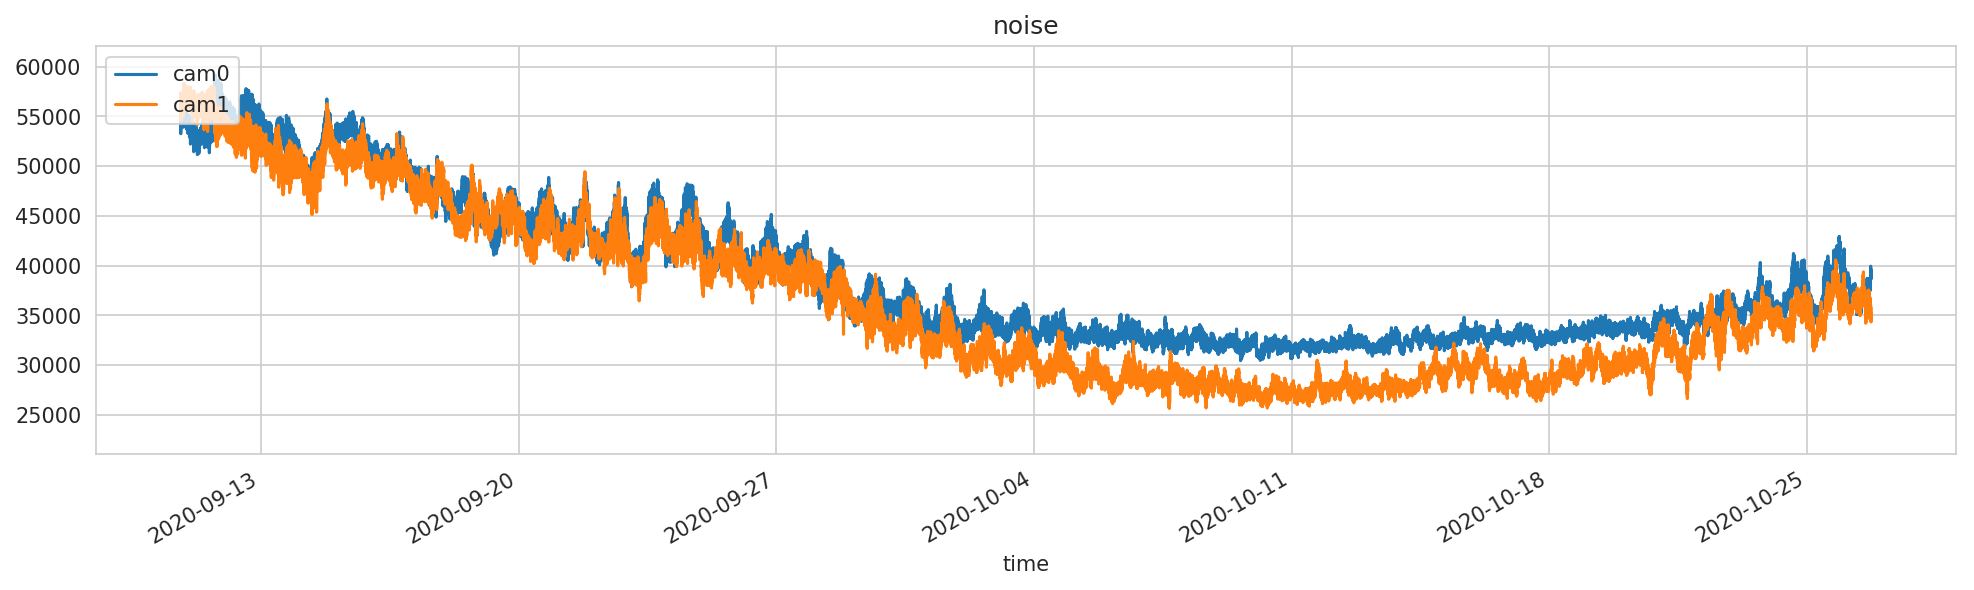 noise_metrics live preview